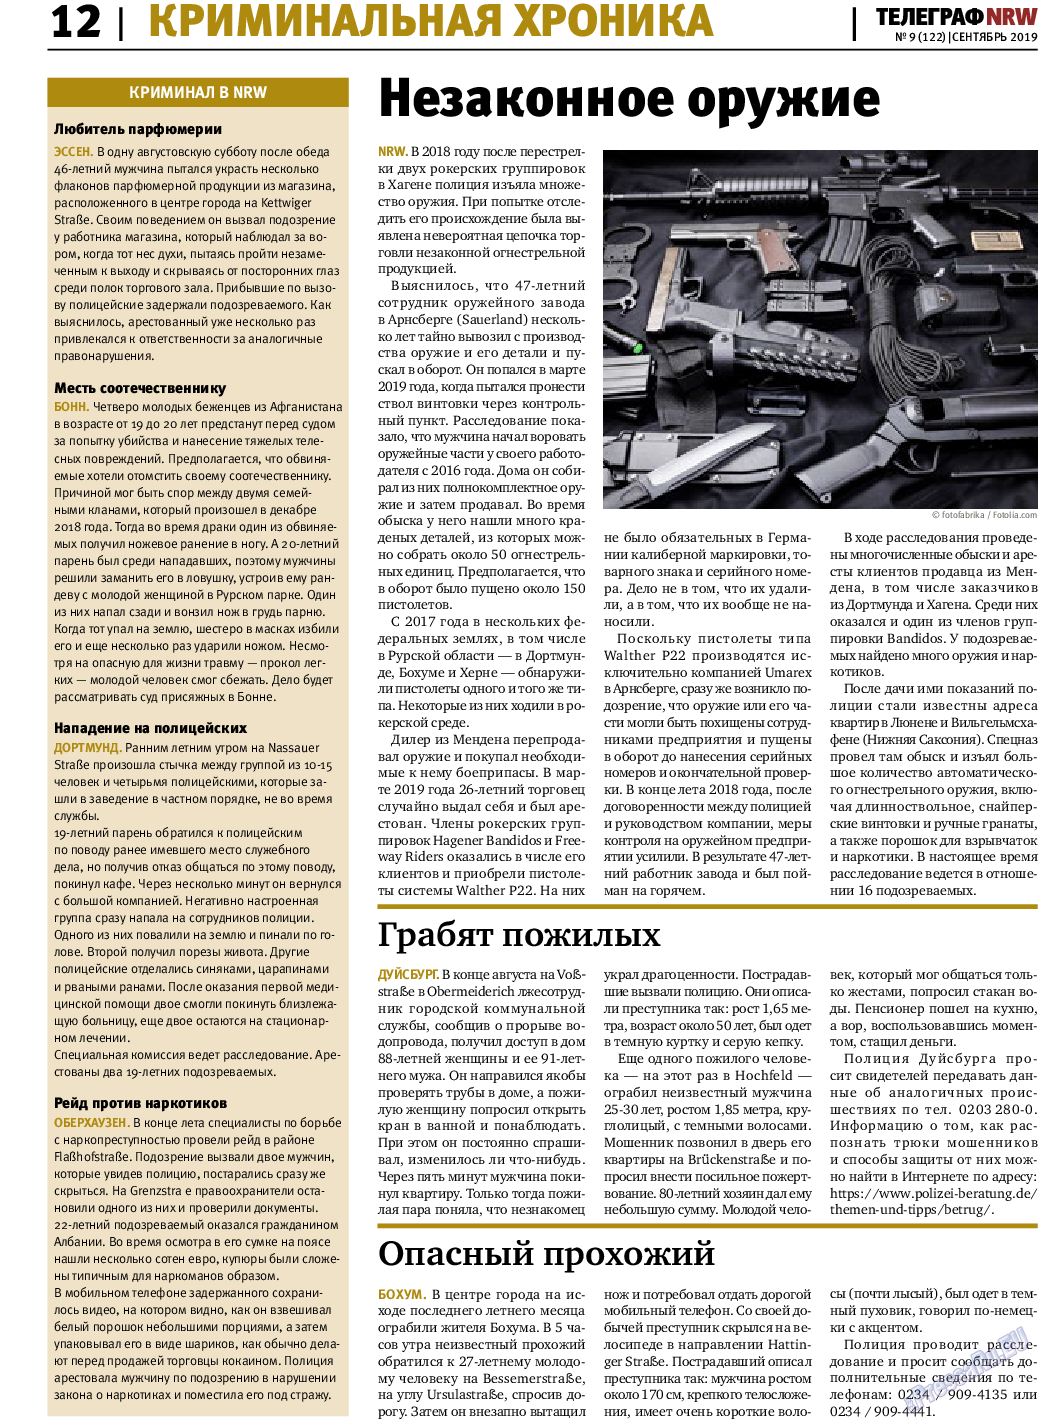 Телеграф NRW, газета. 2019 №9 стр.12